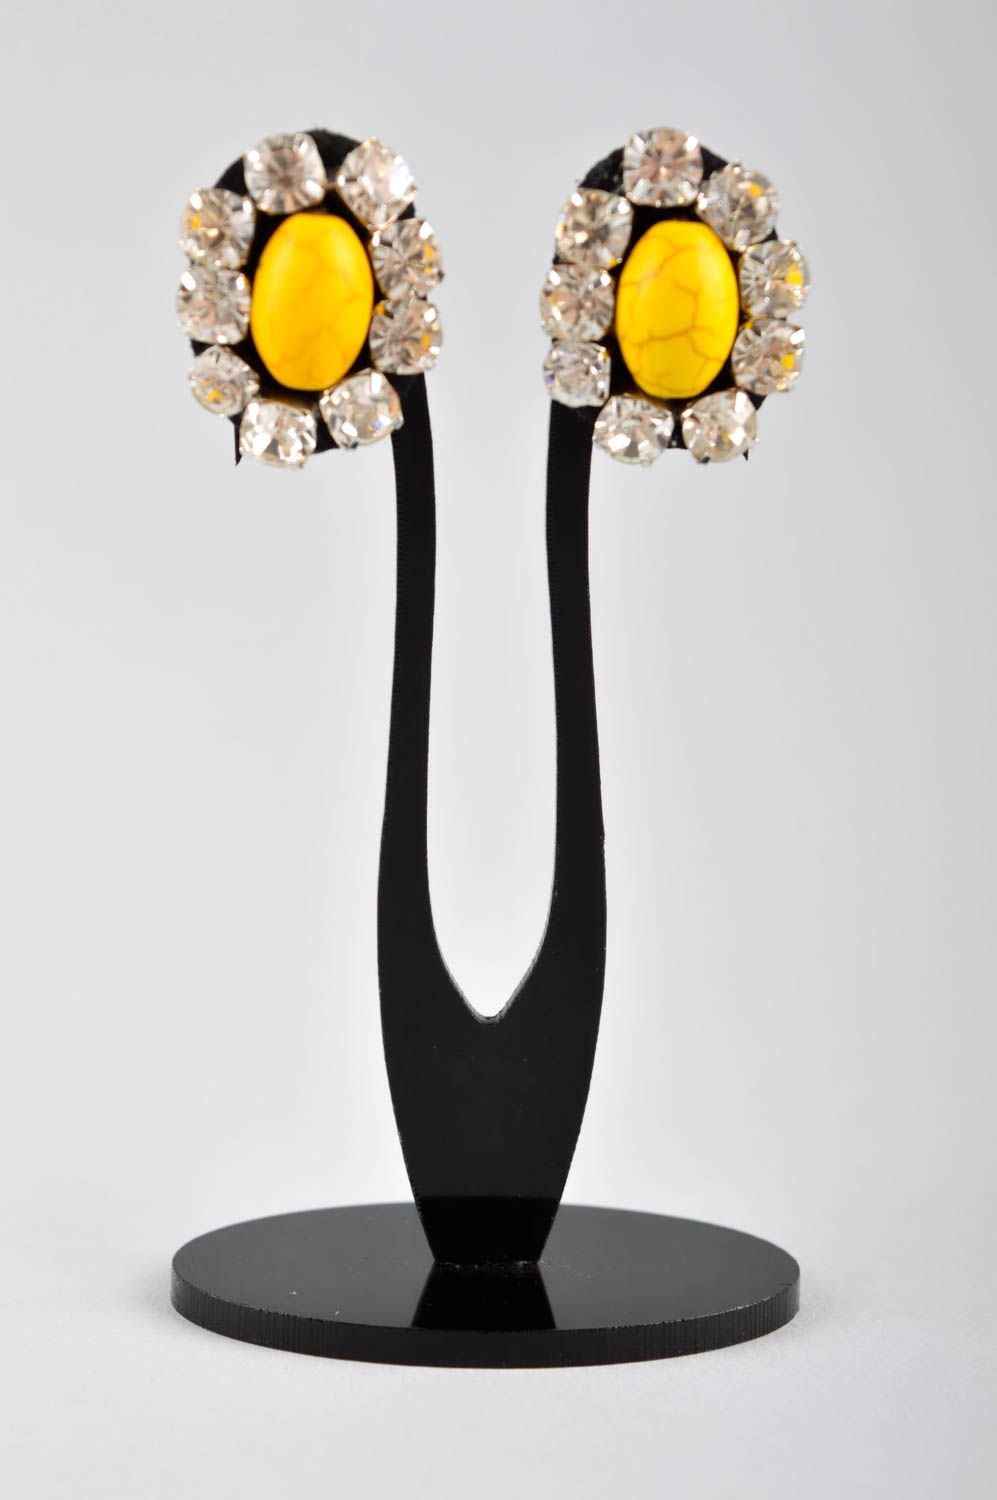 Handmade earrings lemon leather earrings unique jewelry accessories for girls photo 2